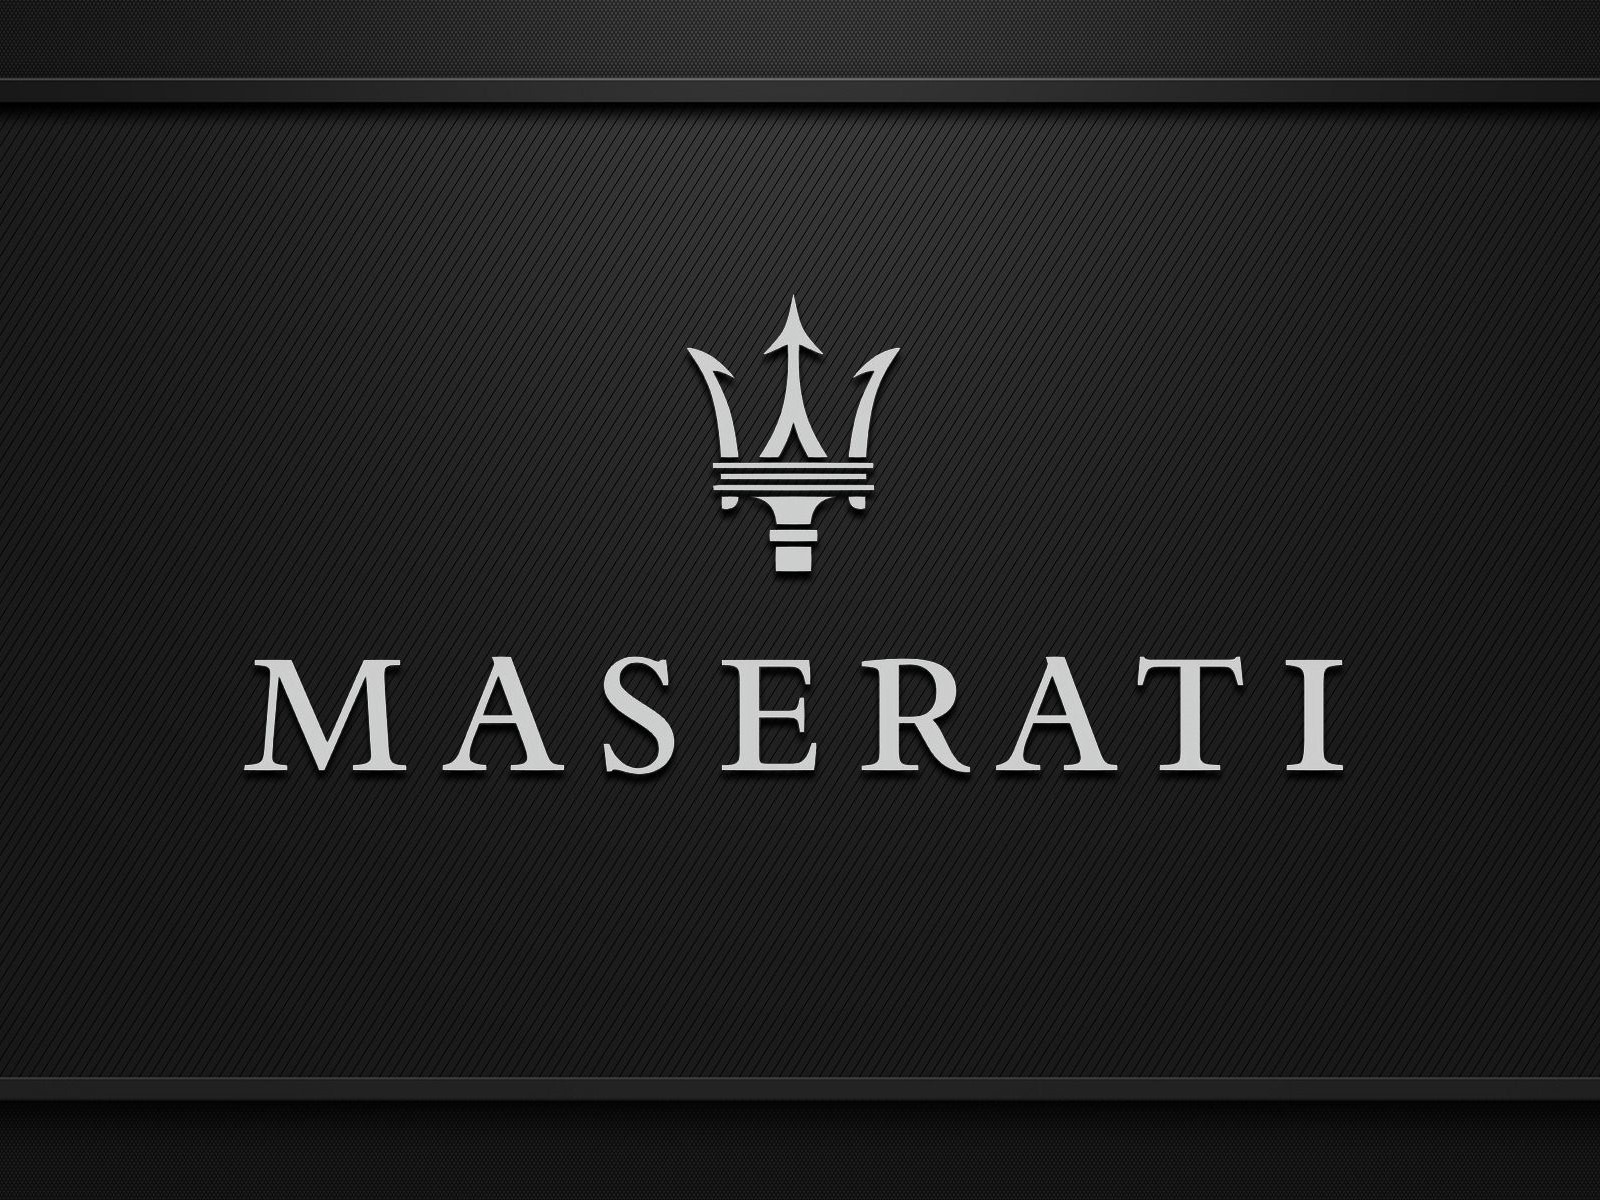 Maserati Constructeur Automobiles Italien crée par les frères Maserati